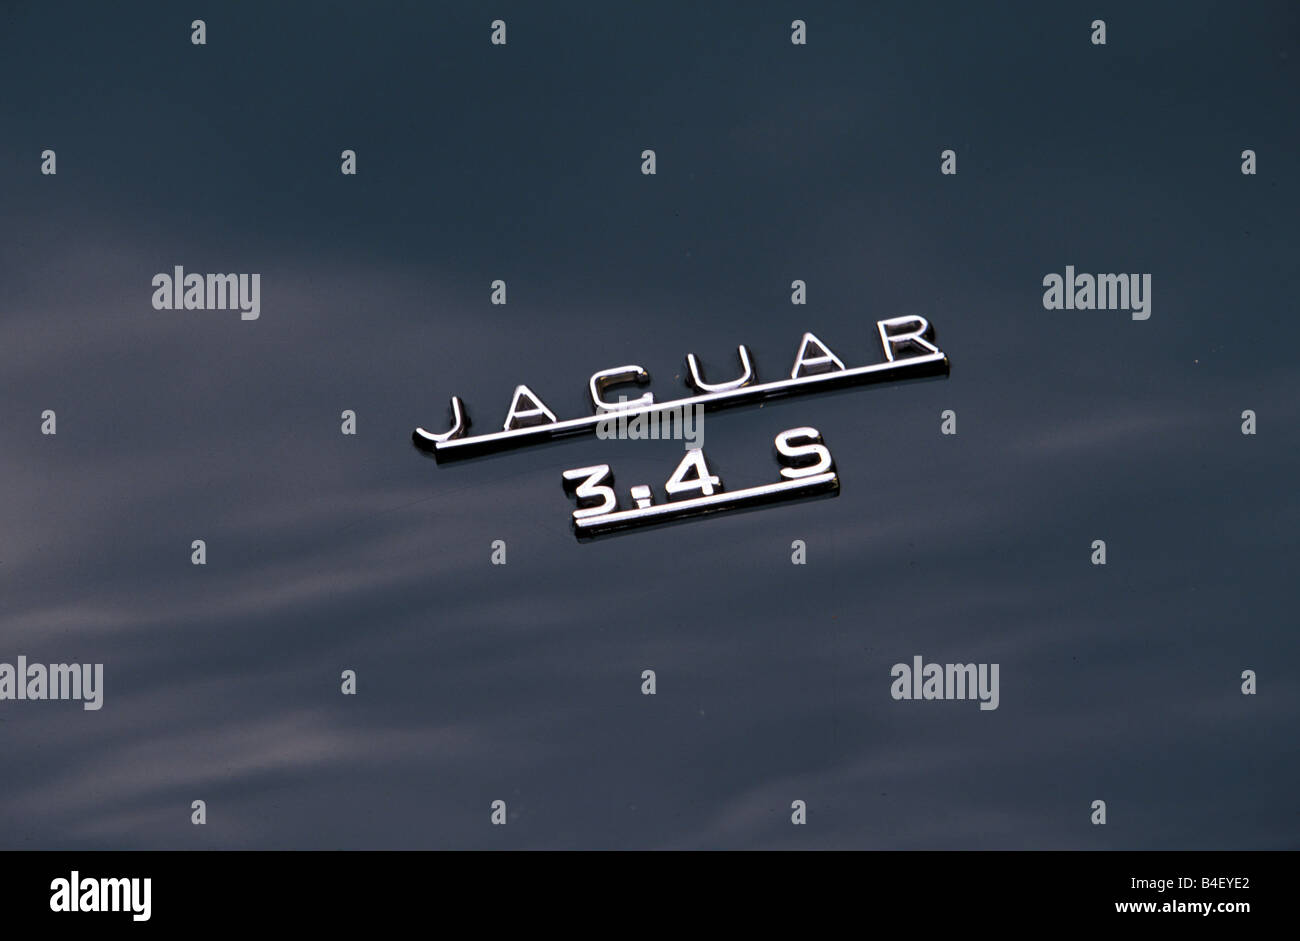 Jaguar S-Type 3.4, Auto, Oldtimer, 1960er Jahre, sechziger Jahre, dunkelgrün, Limousine, Detail, Details, Typenschild, Logo, Stockfoto